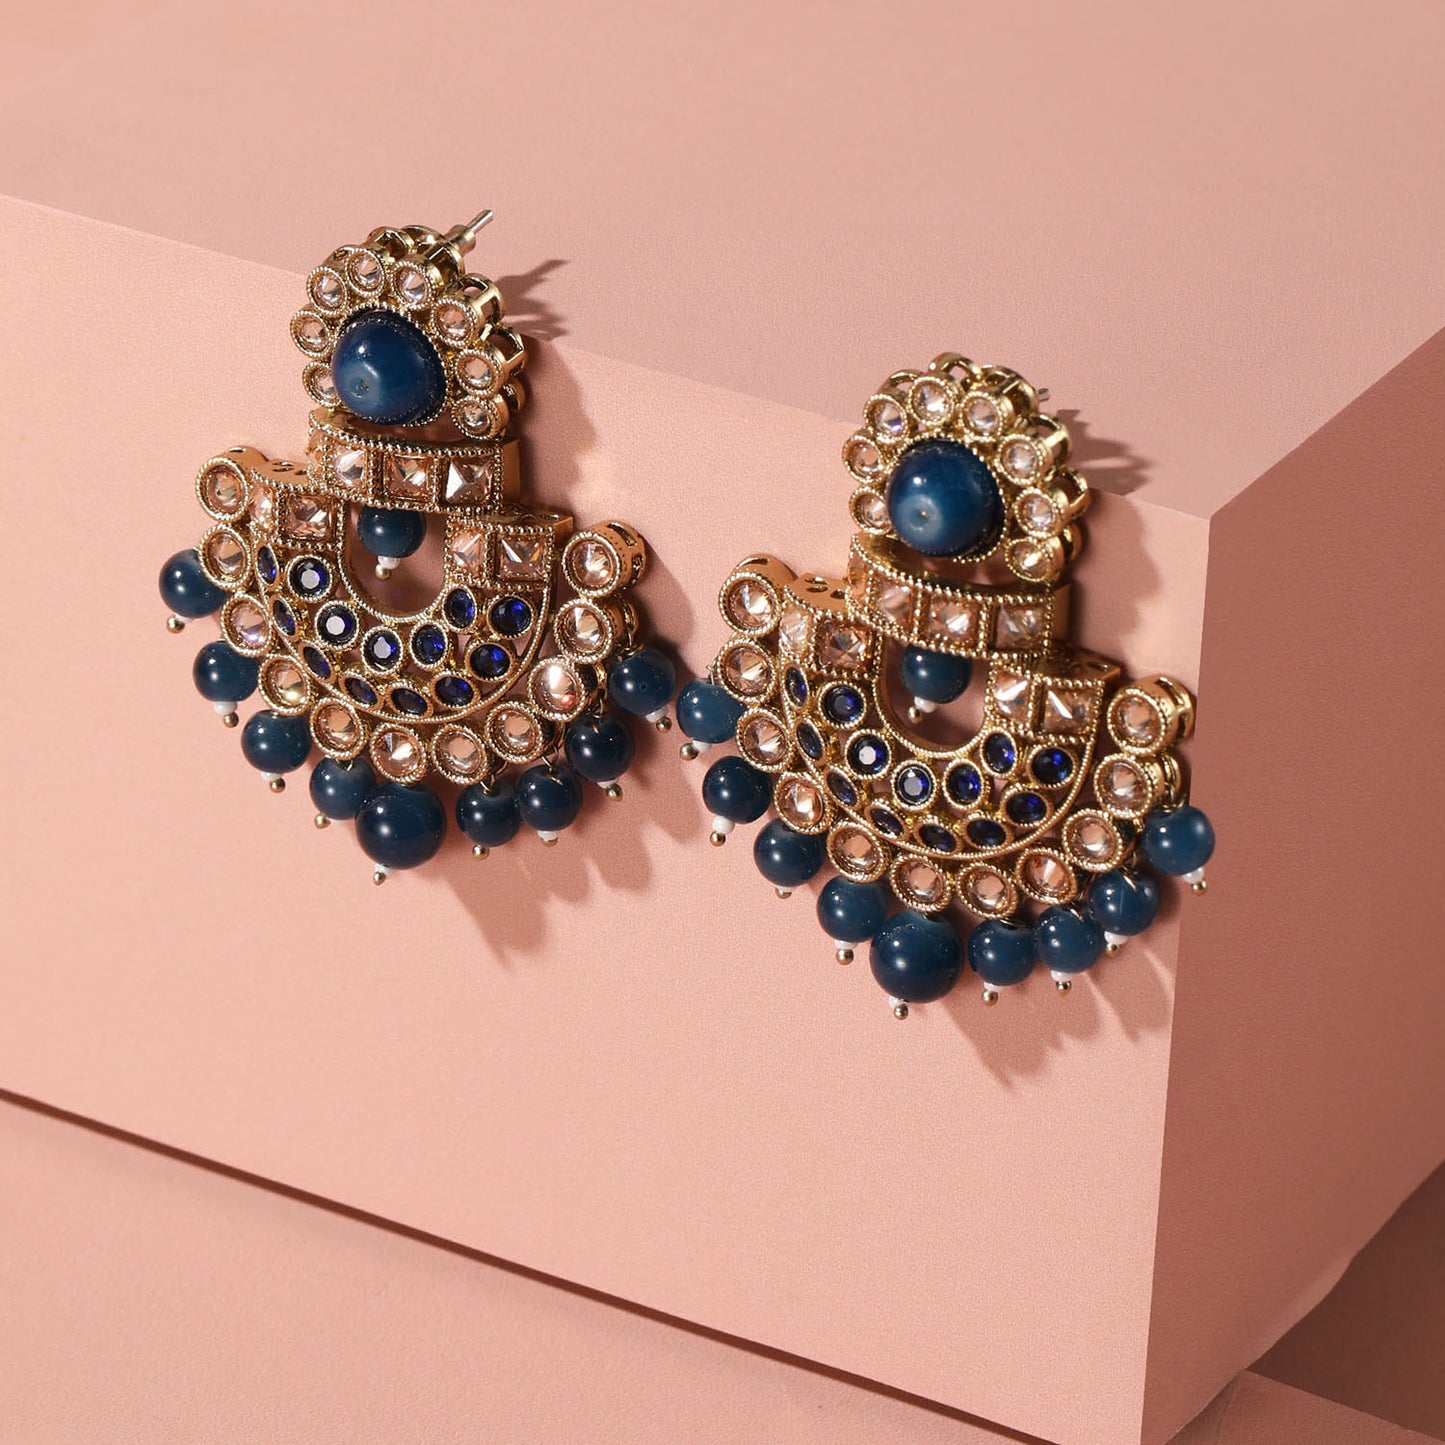 Designer Antique Gold Tone Blue Earrings